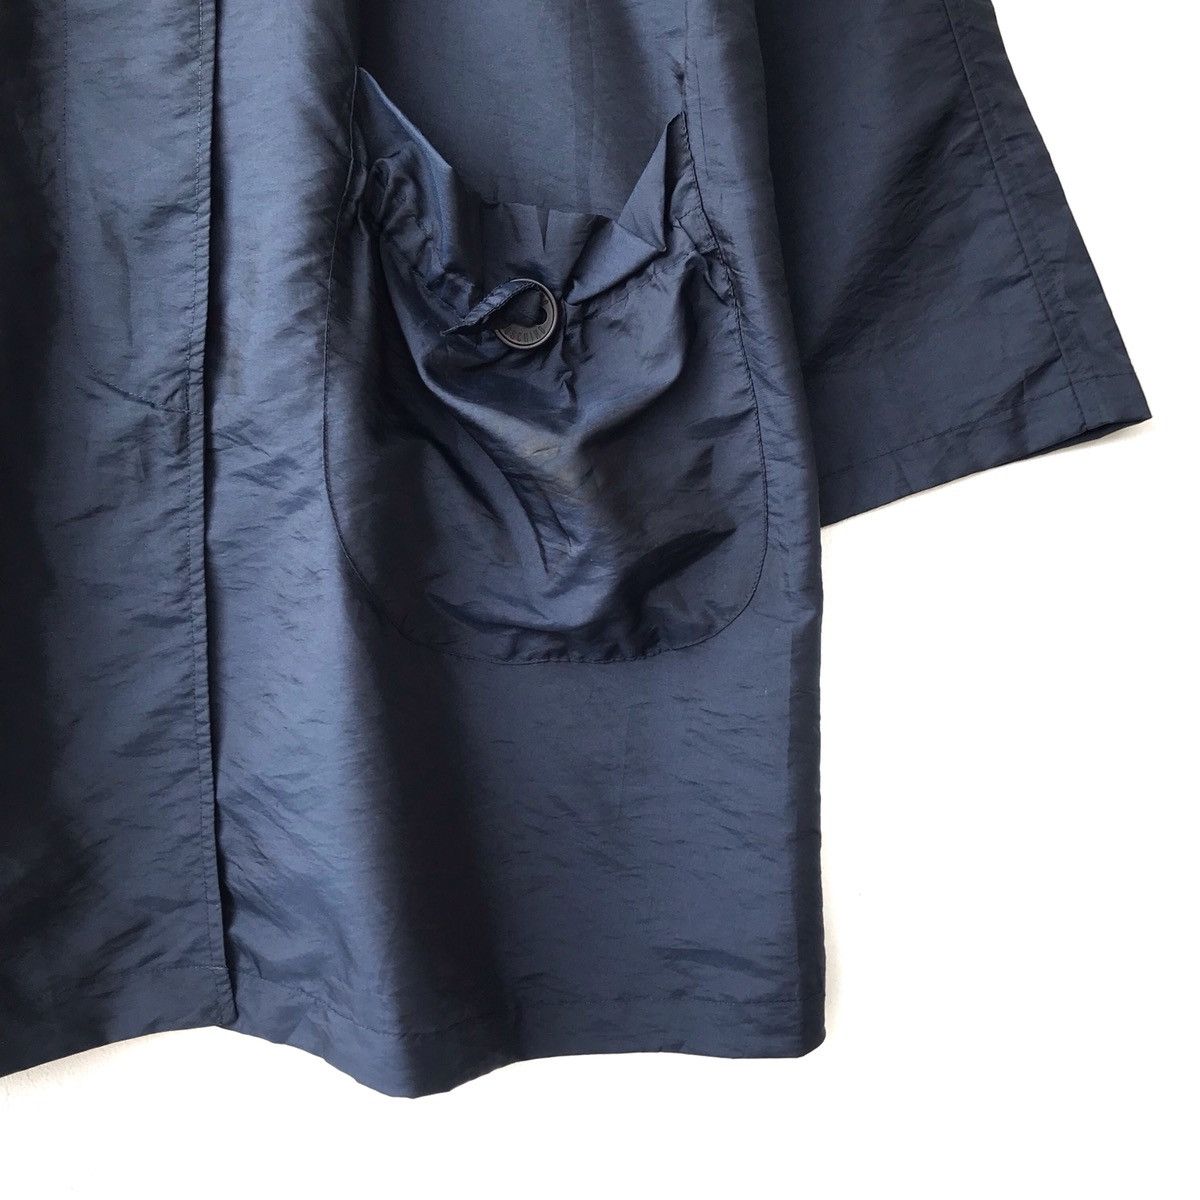 Moschino Cheap and Chic Moschino Ombrelli Nylon Windcoat Size S / US 4 / IT 40 - 5 Thumbnail